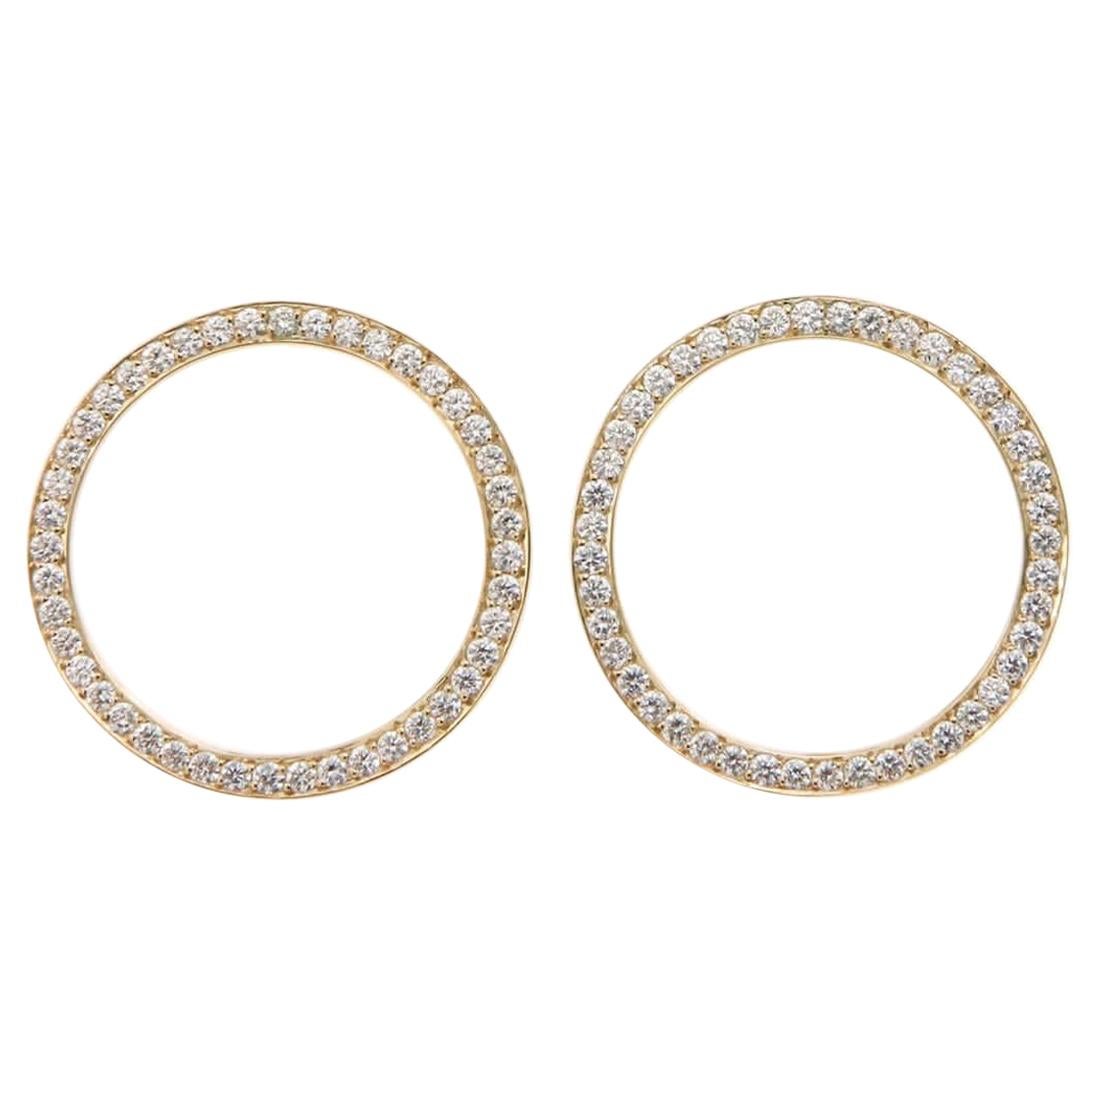 Pave'd Diamond Circle Earrings in 18 Karat Yellow Gold